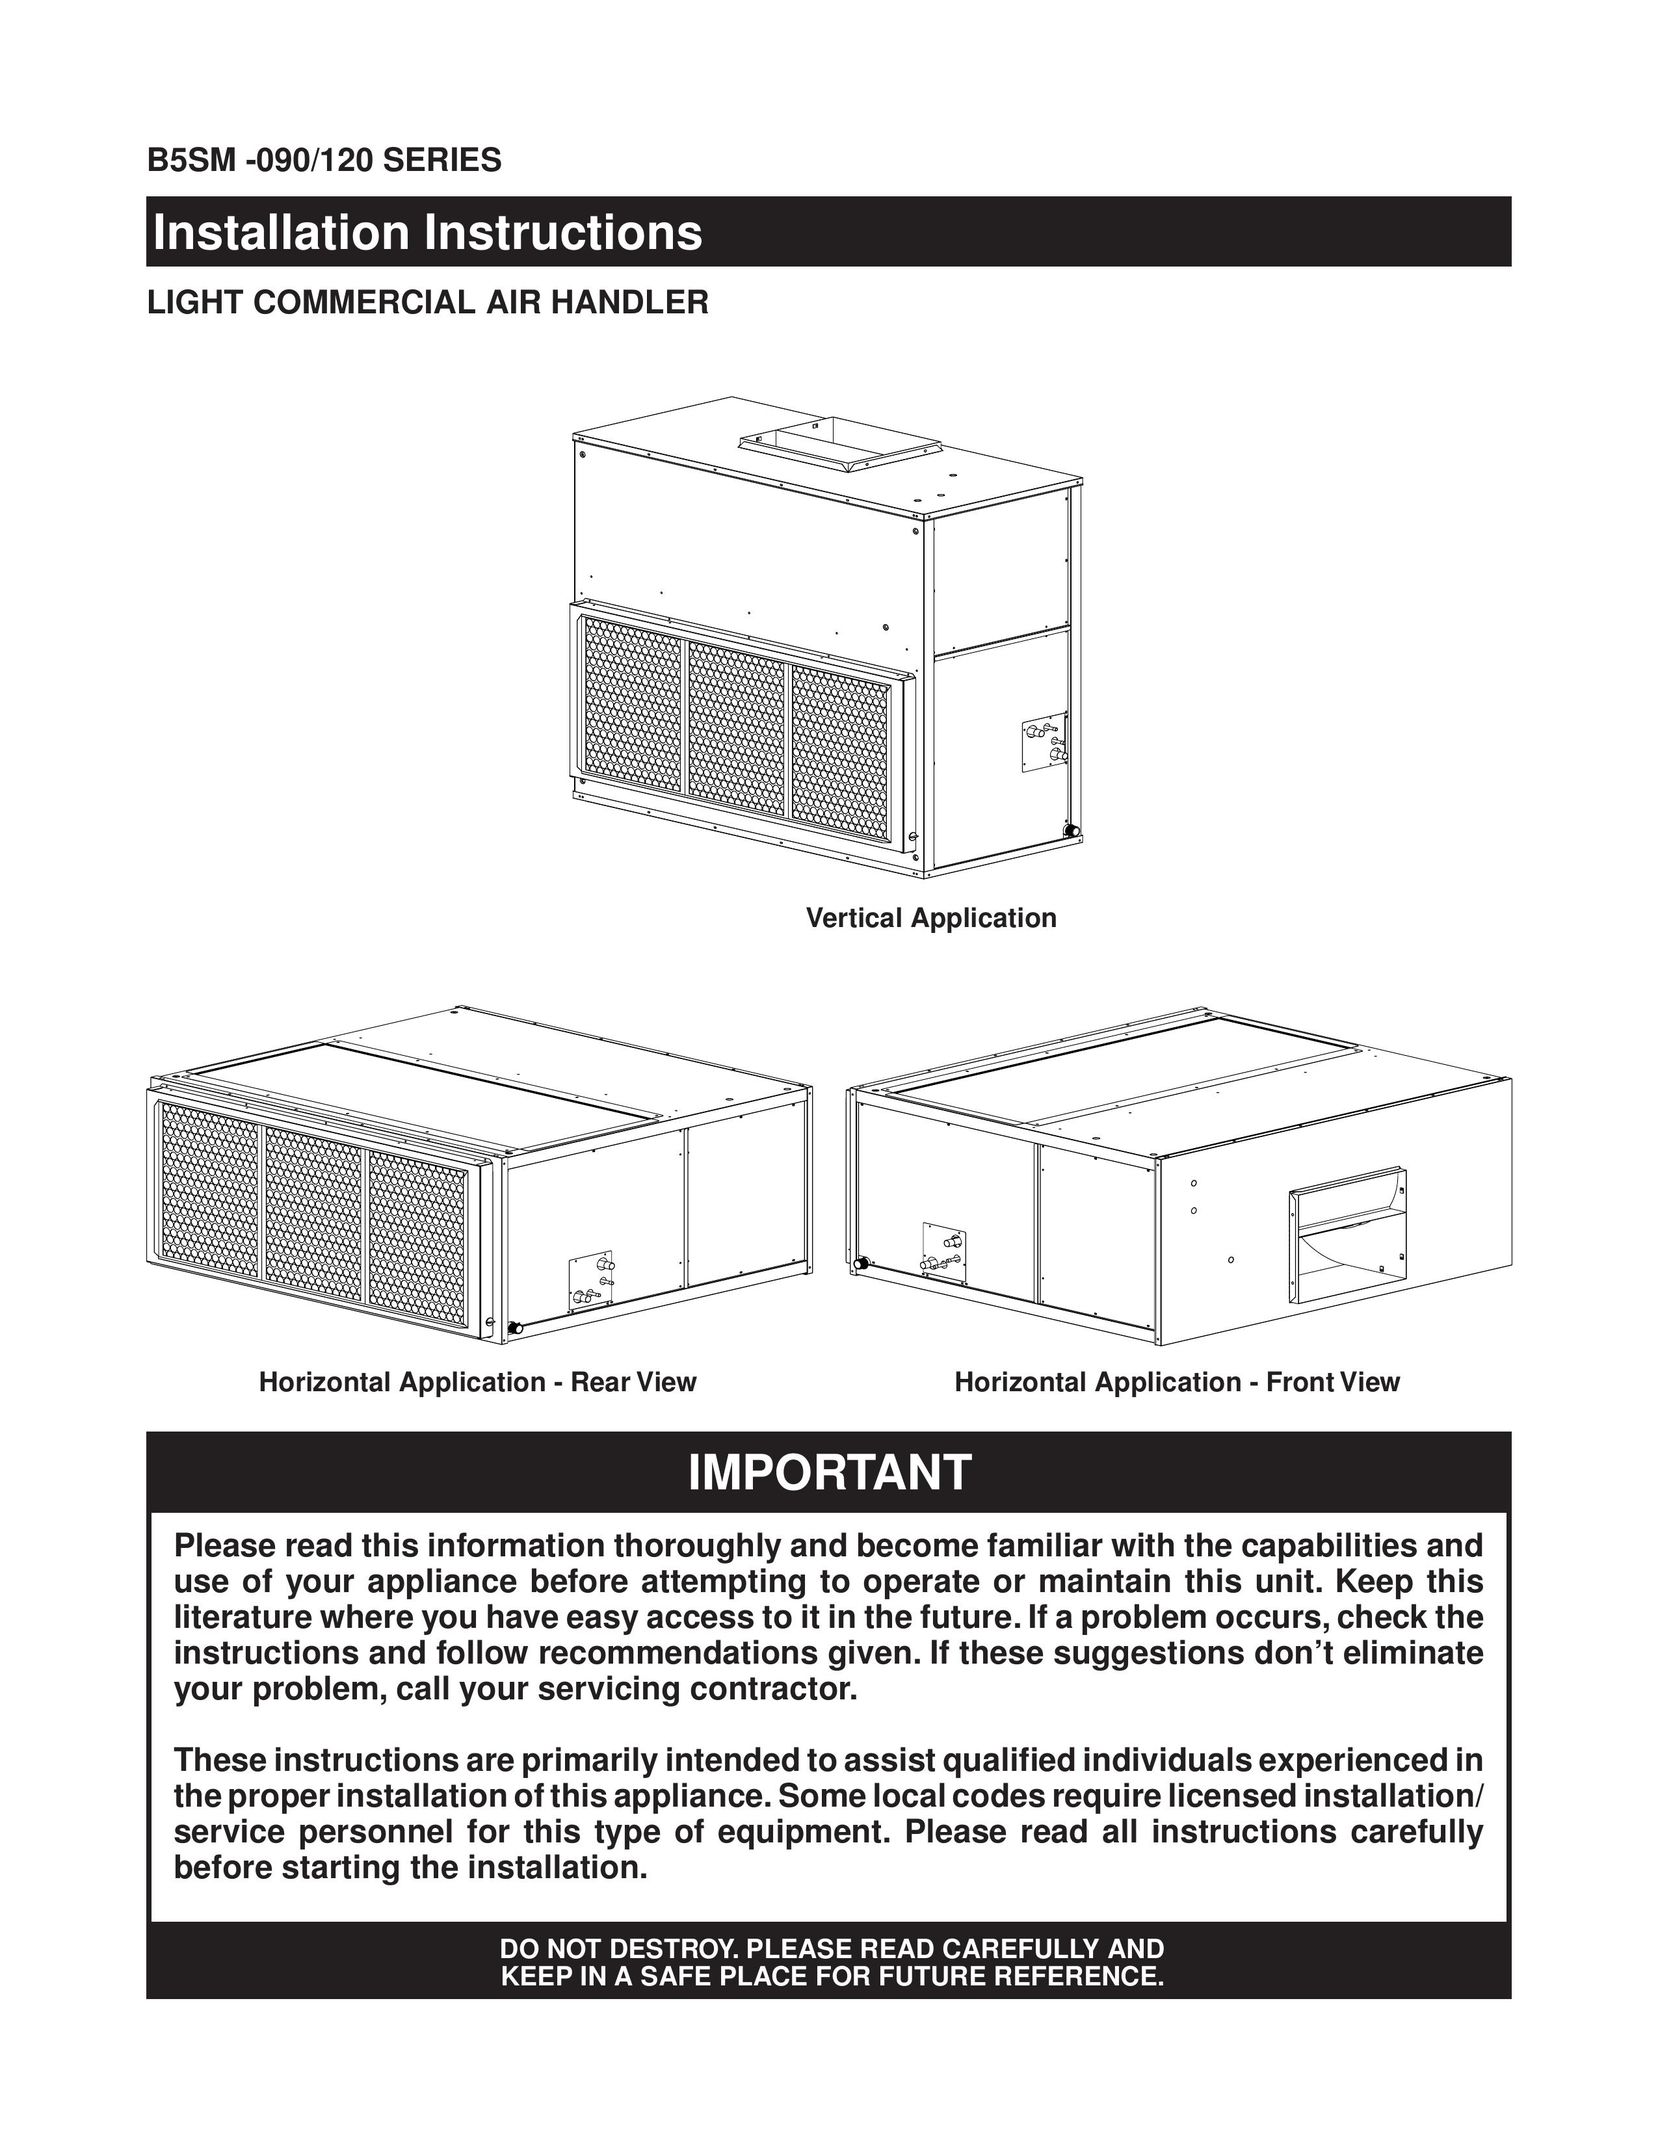 Nordyne B5SM -090 Air Conditioner User Manual